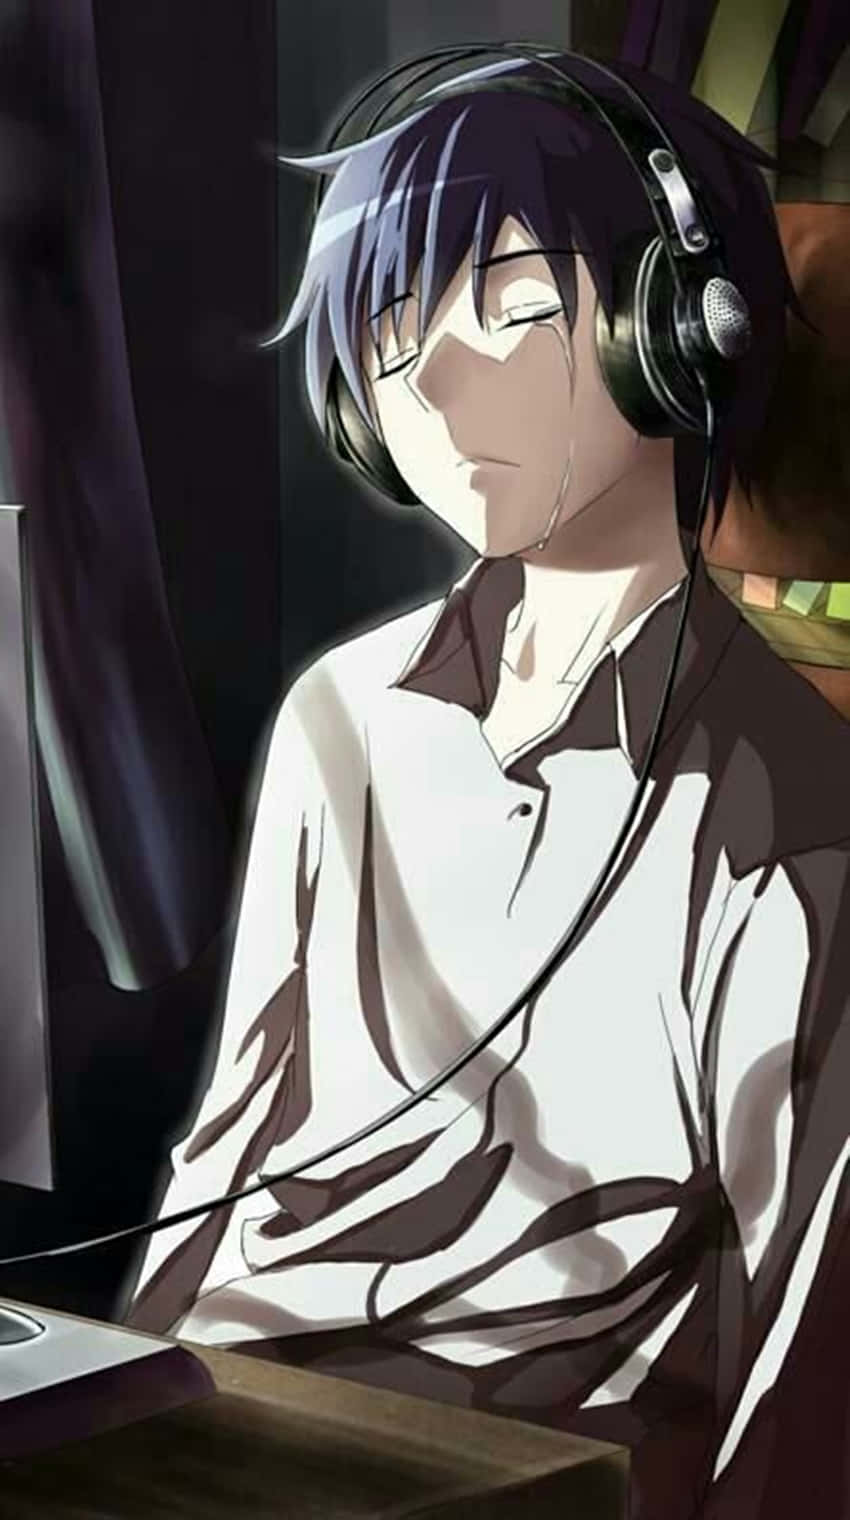 Depressed Anime Boy Wearing Headphones Wallpaper